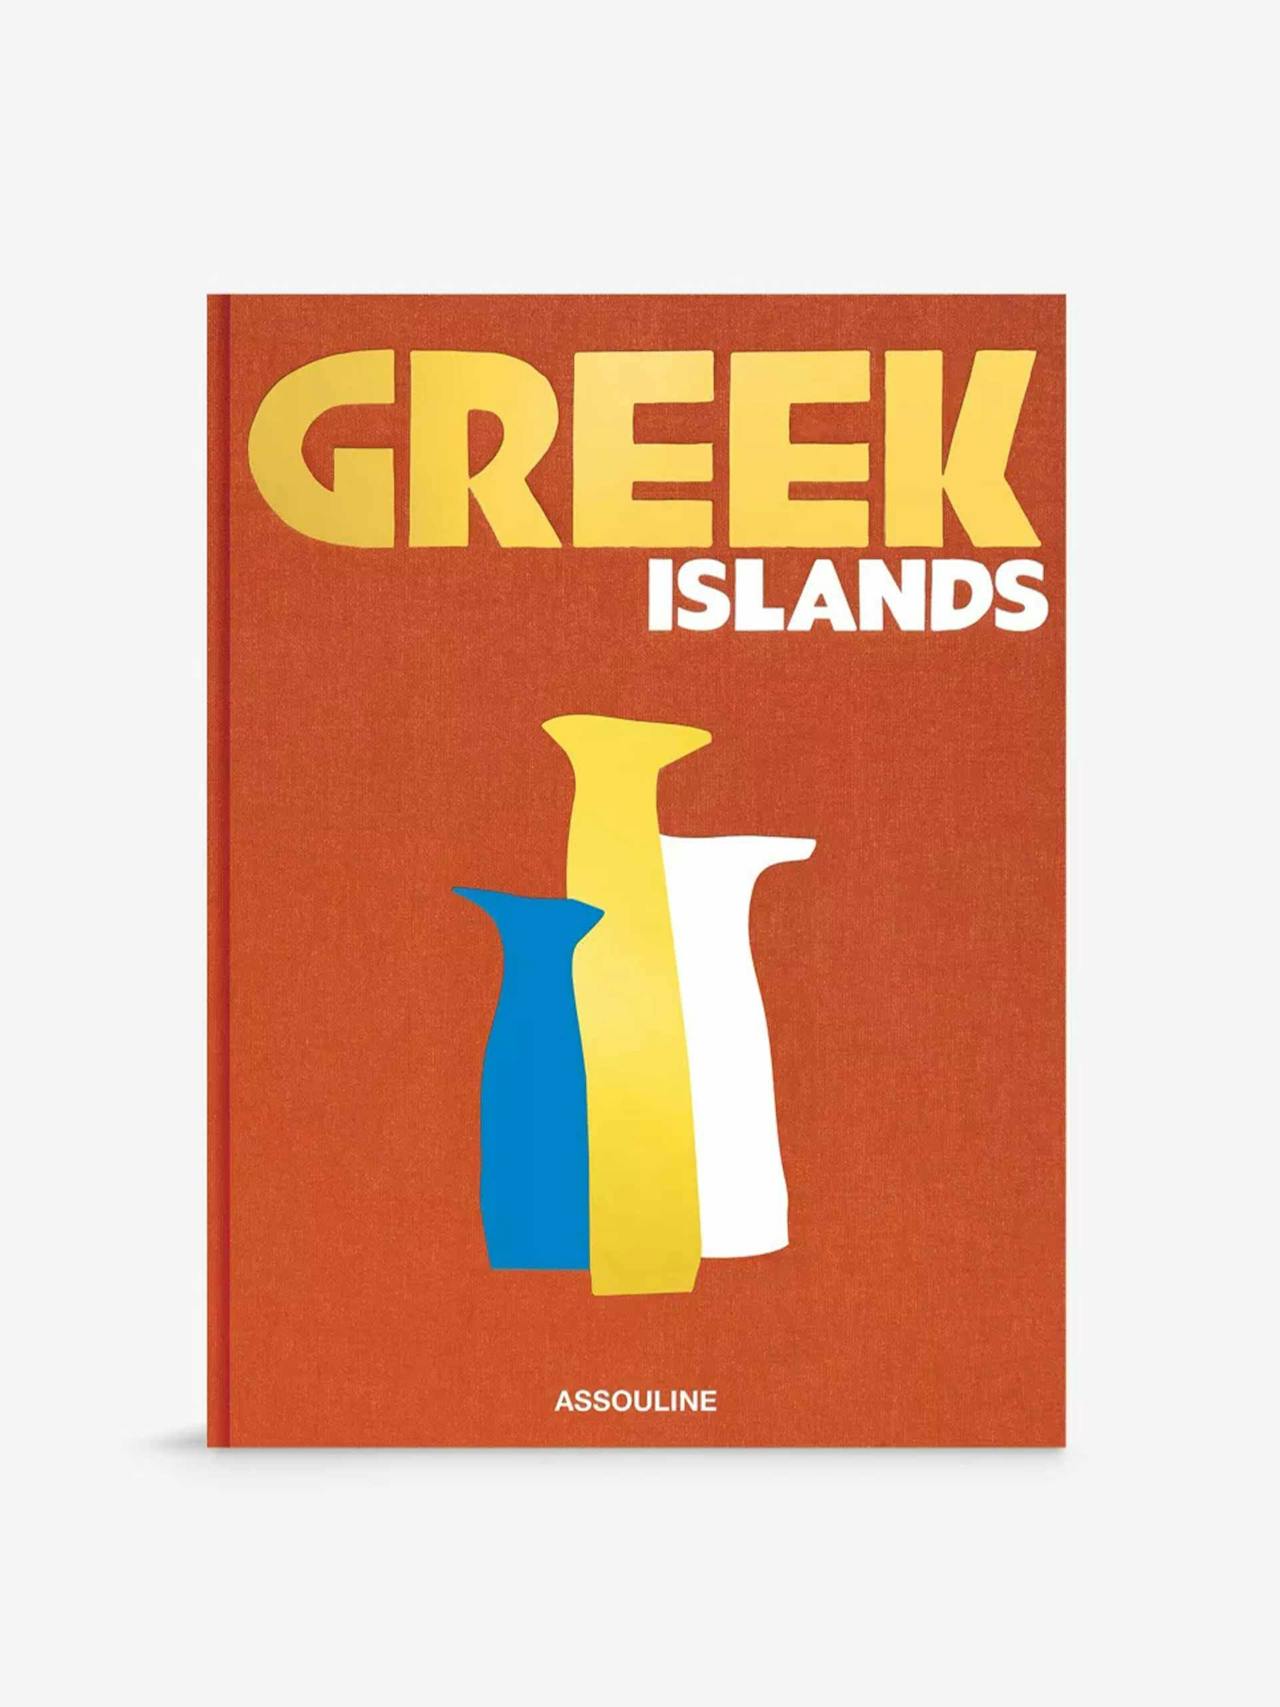 At Greek Islands hardcover book